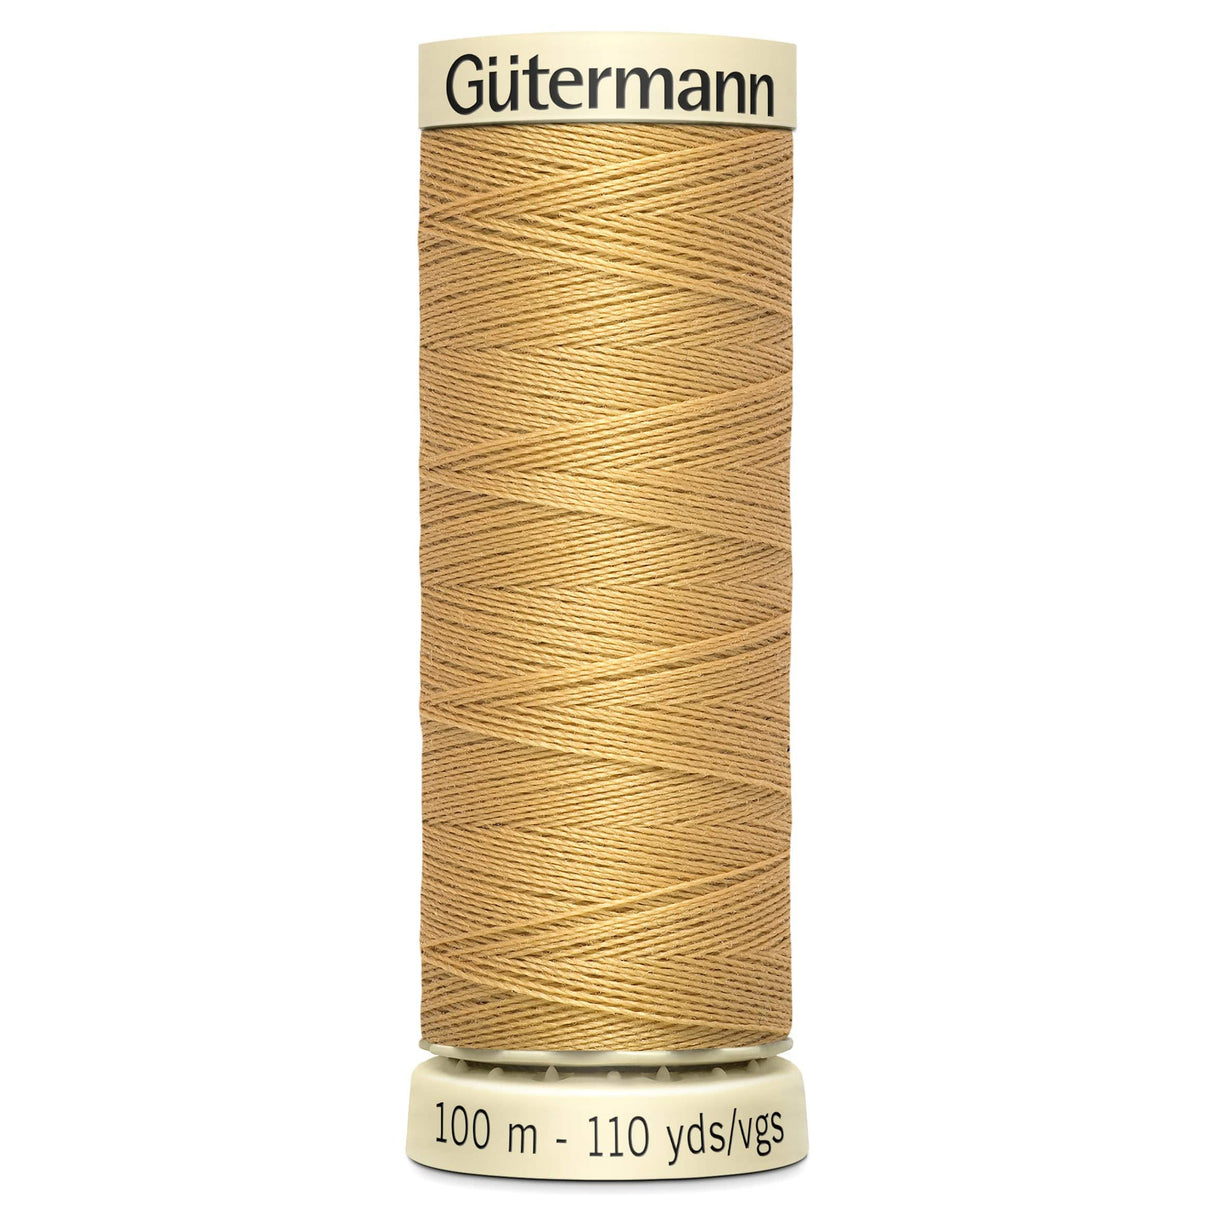 Groves Haberdashery 893 Gutermann Thread Sewing Cotton 100 m Black to Pink